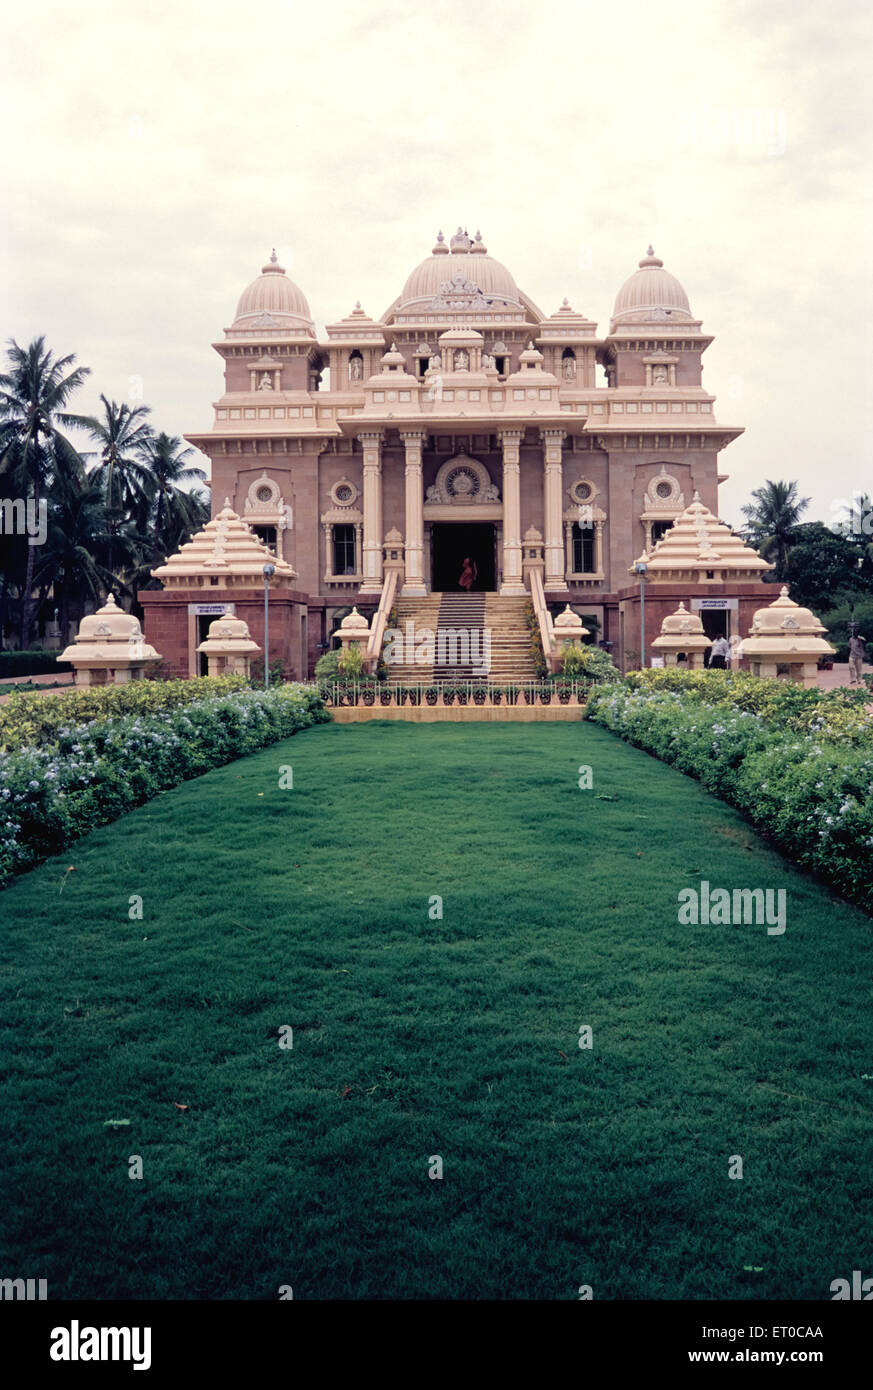 Sri Ramakrishna Math, Ramakrishna Math, Universal Temple, Madras, Chennai, Tamil Nadu, India, Asia Stock Photo